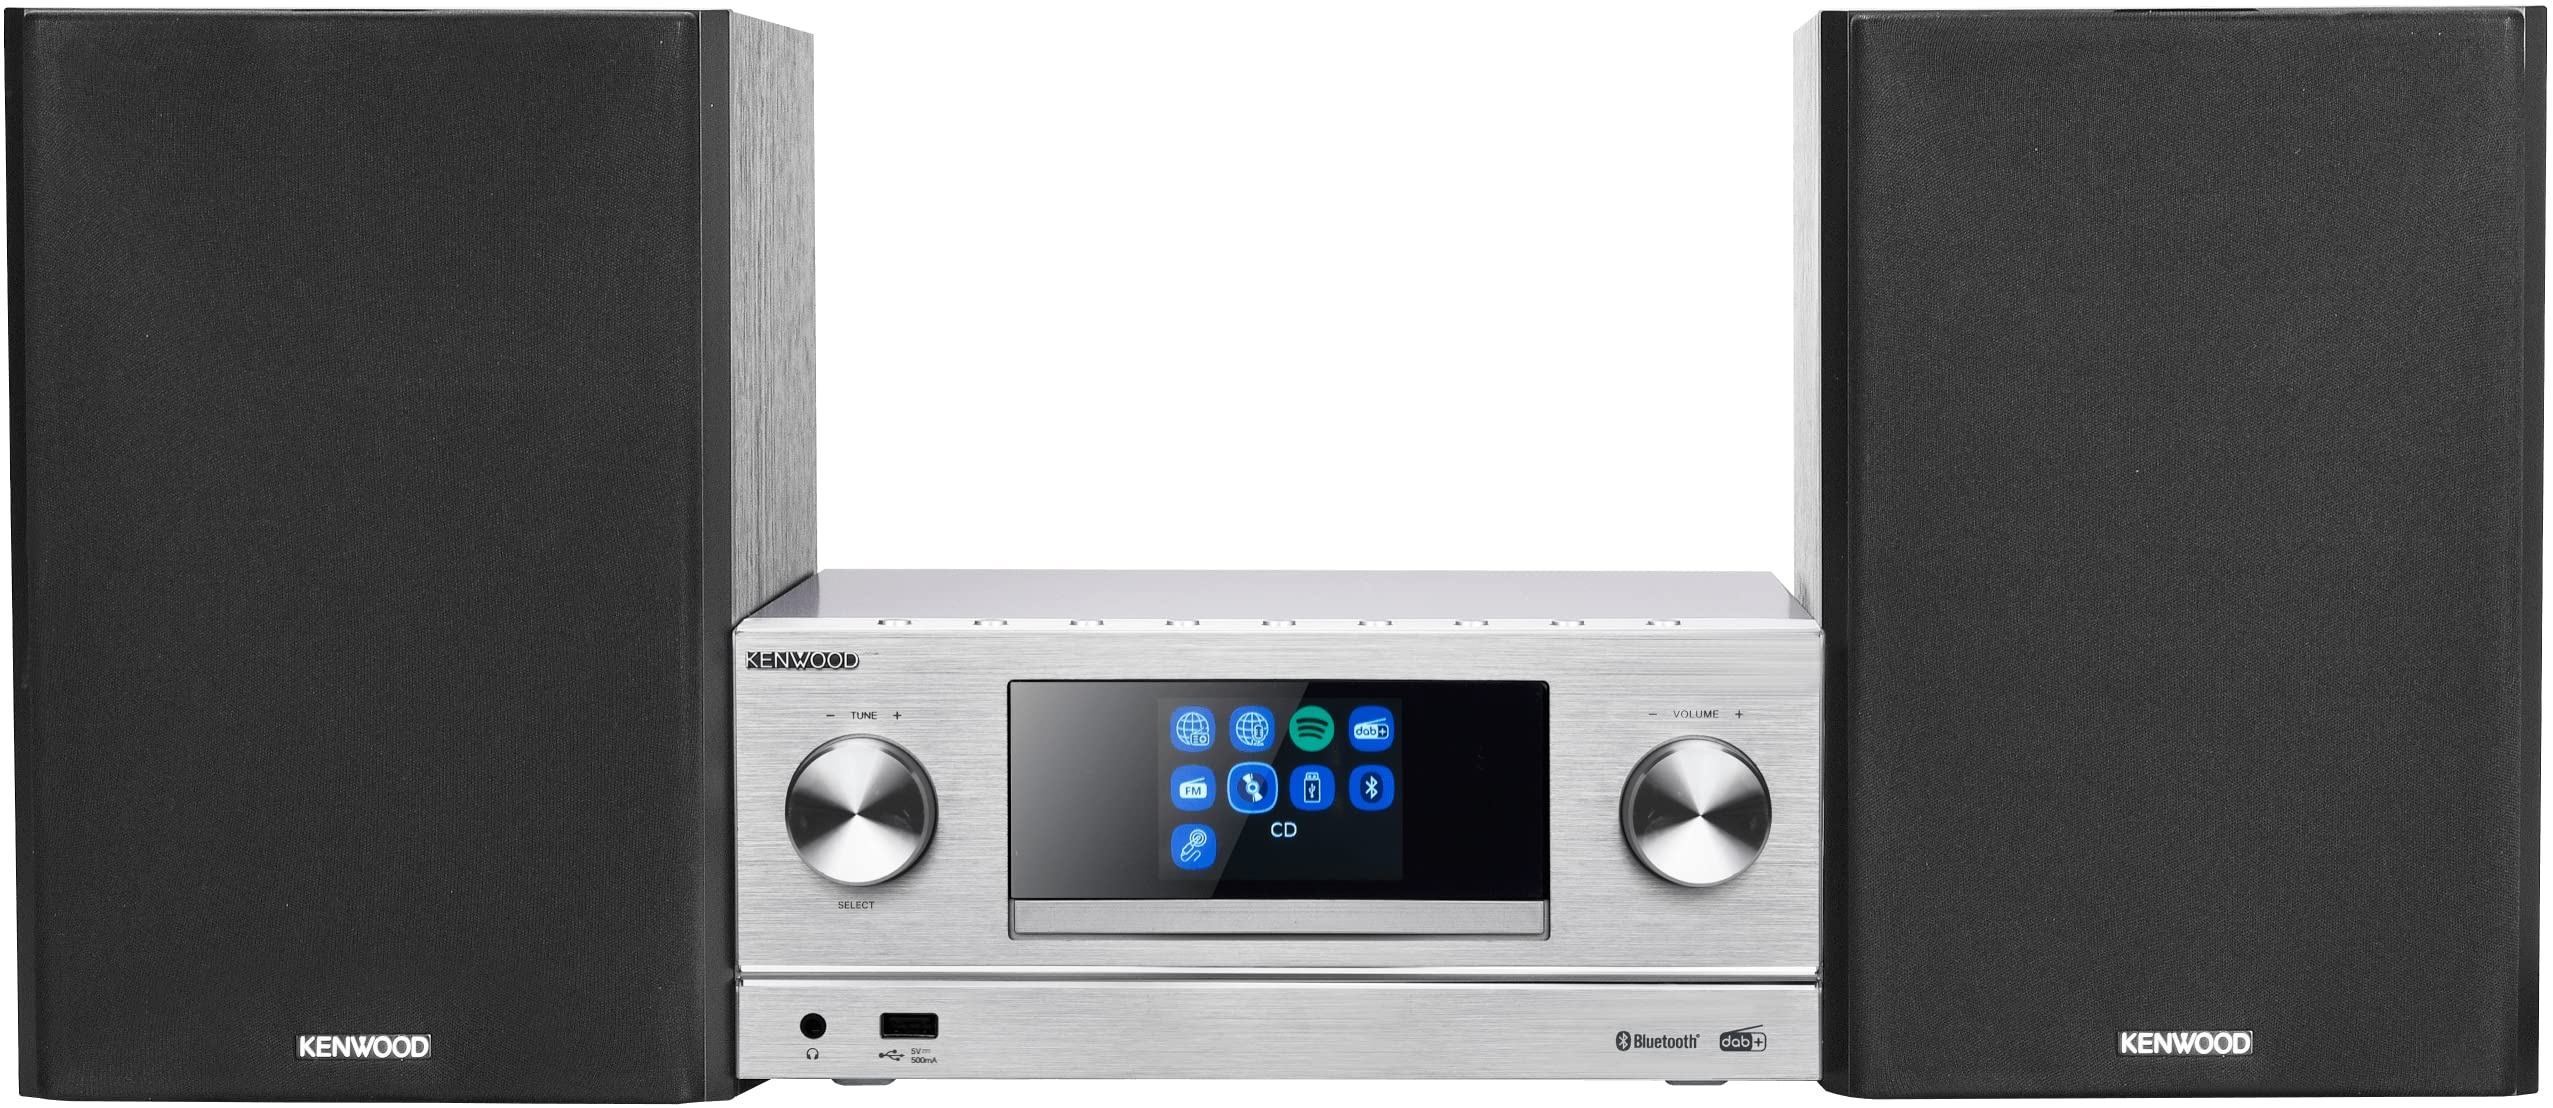 Kenwood M-9000S-S - Smart Micro Hi-Fi System mit Internetradio, DAB+, CD/USB und Audiostreaming, Farbe Silber